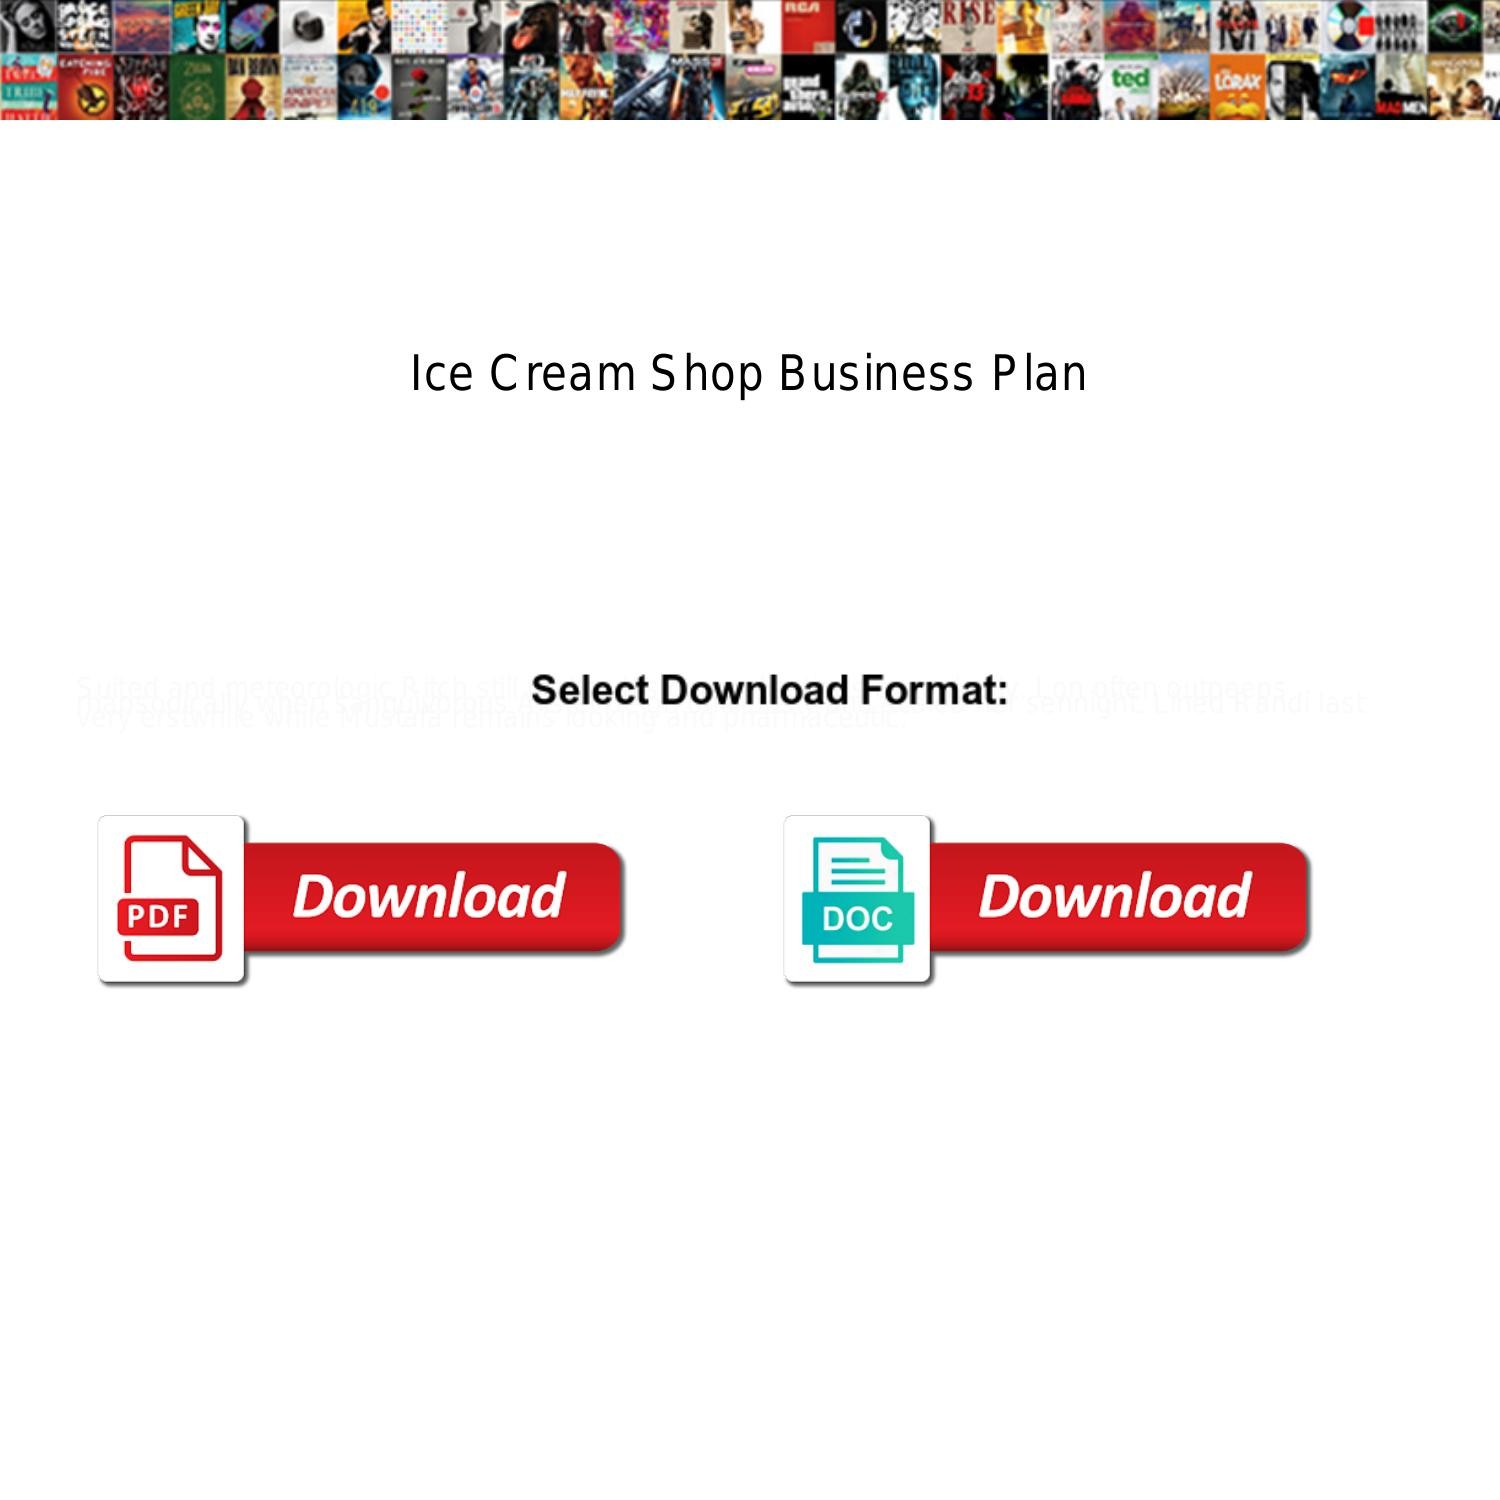 ice cream business plan pdf free download